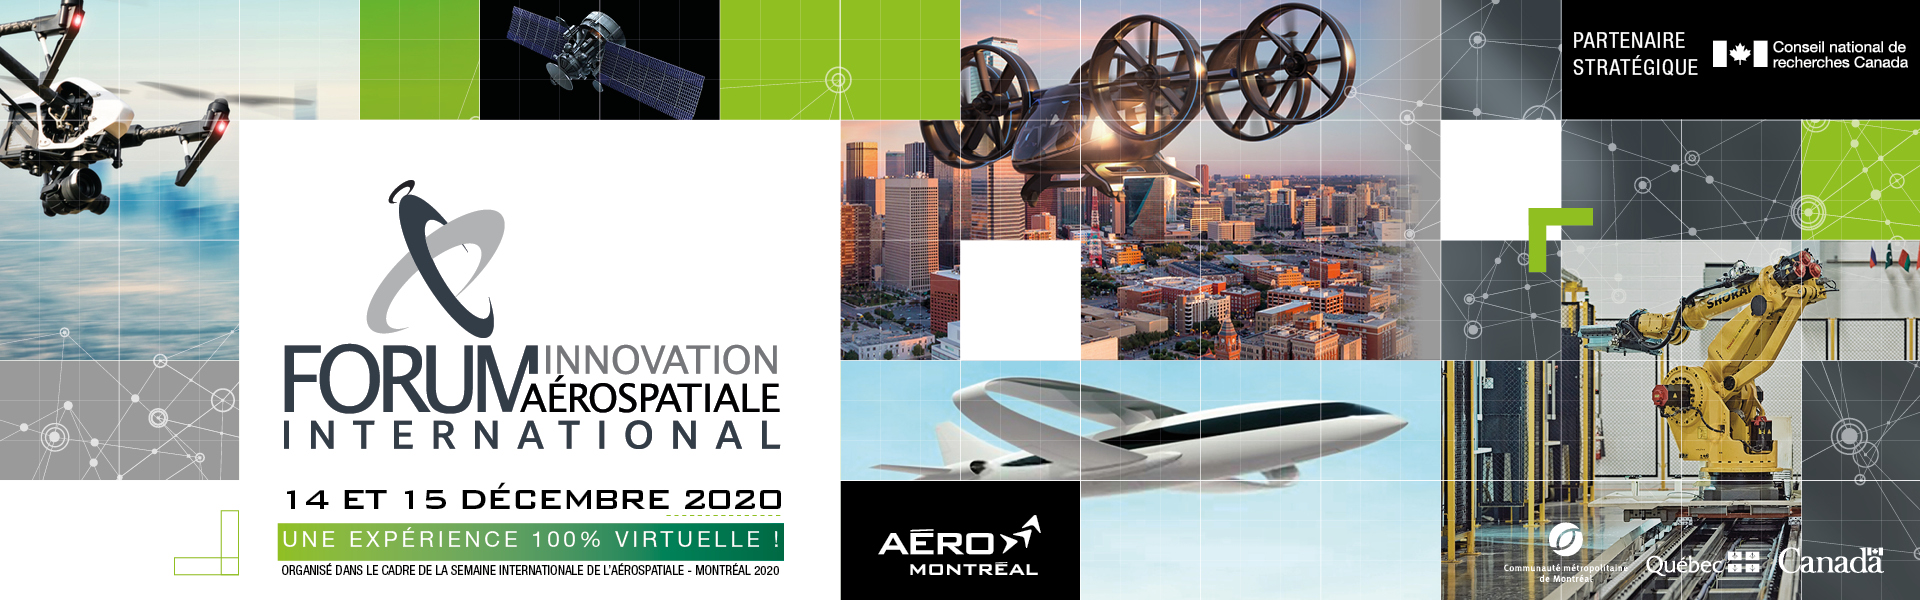 Forum innovation aérospatiale international 2020 (100% virtuel)